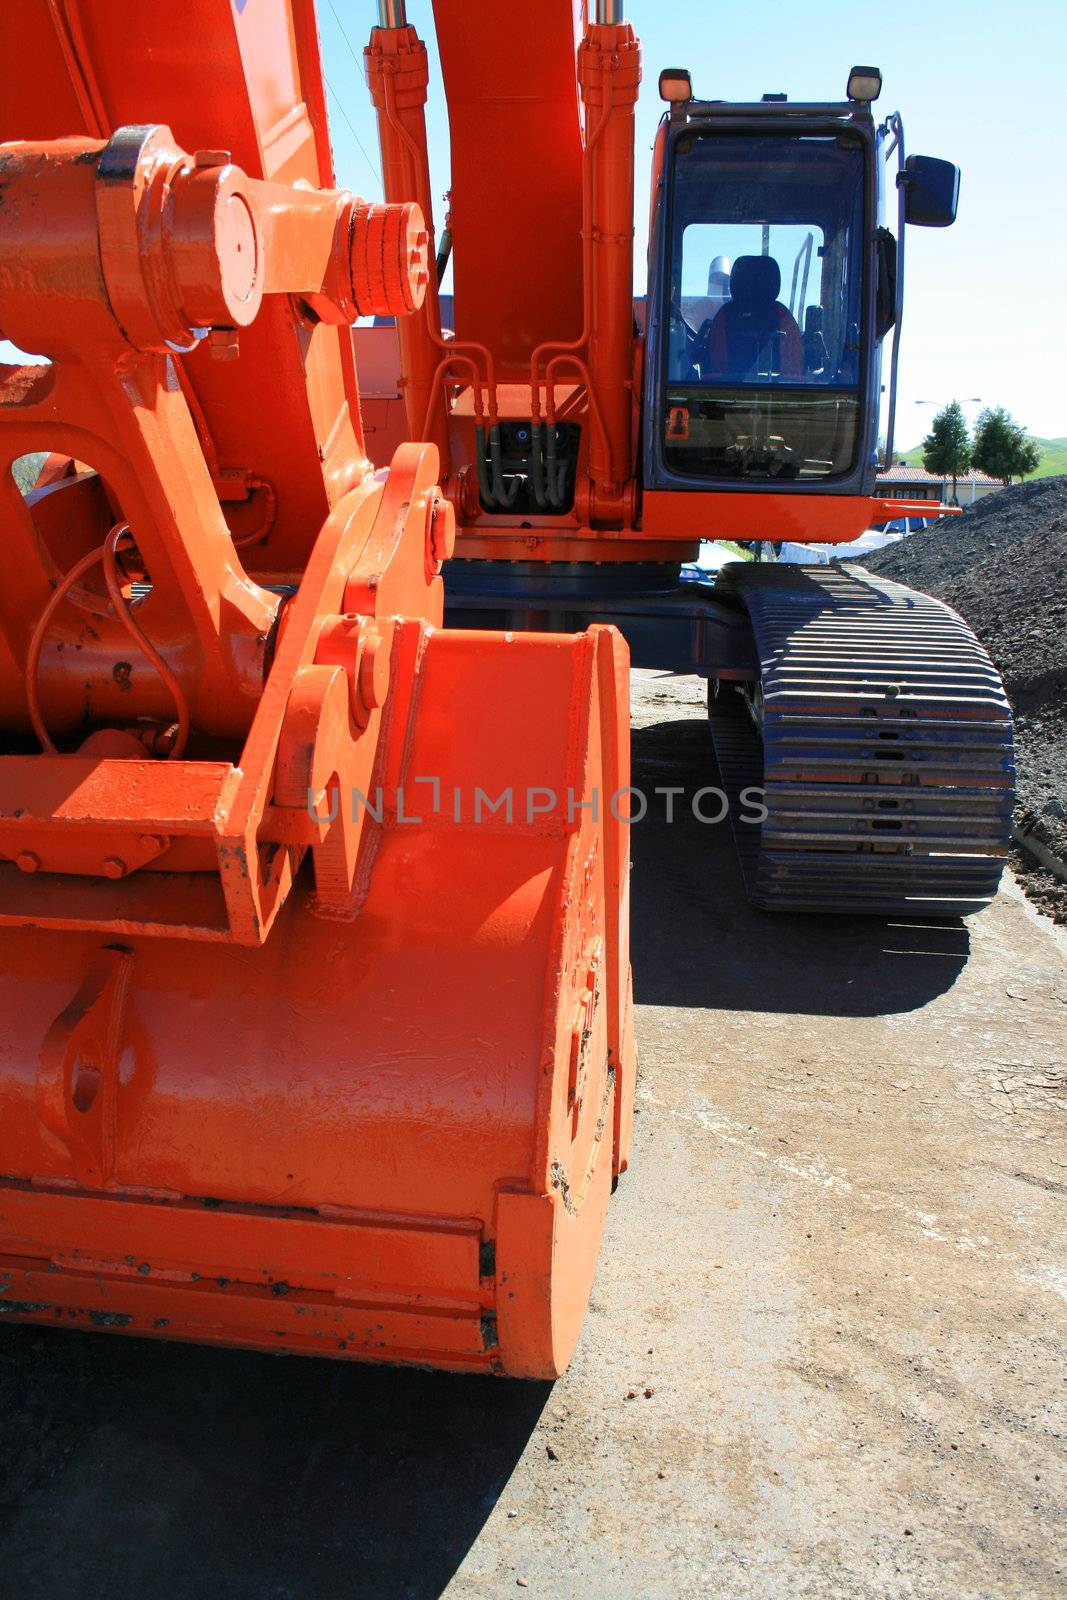 Orange excavator close up on a construction sight.
